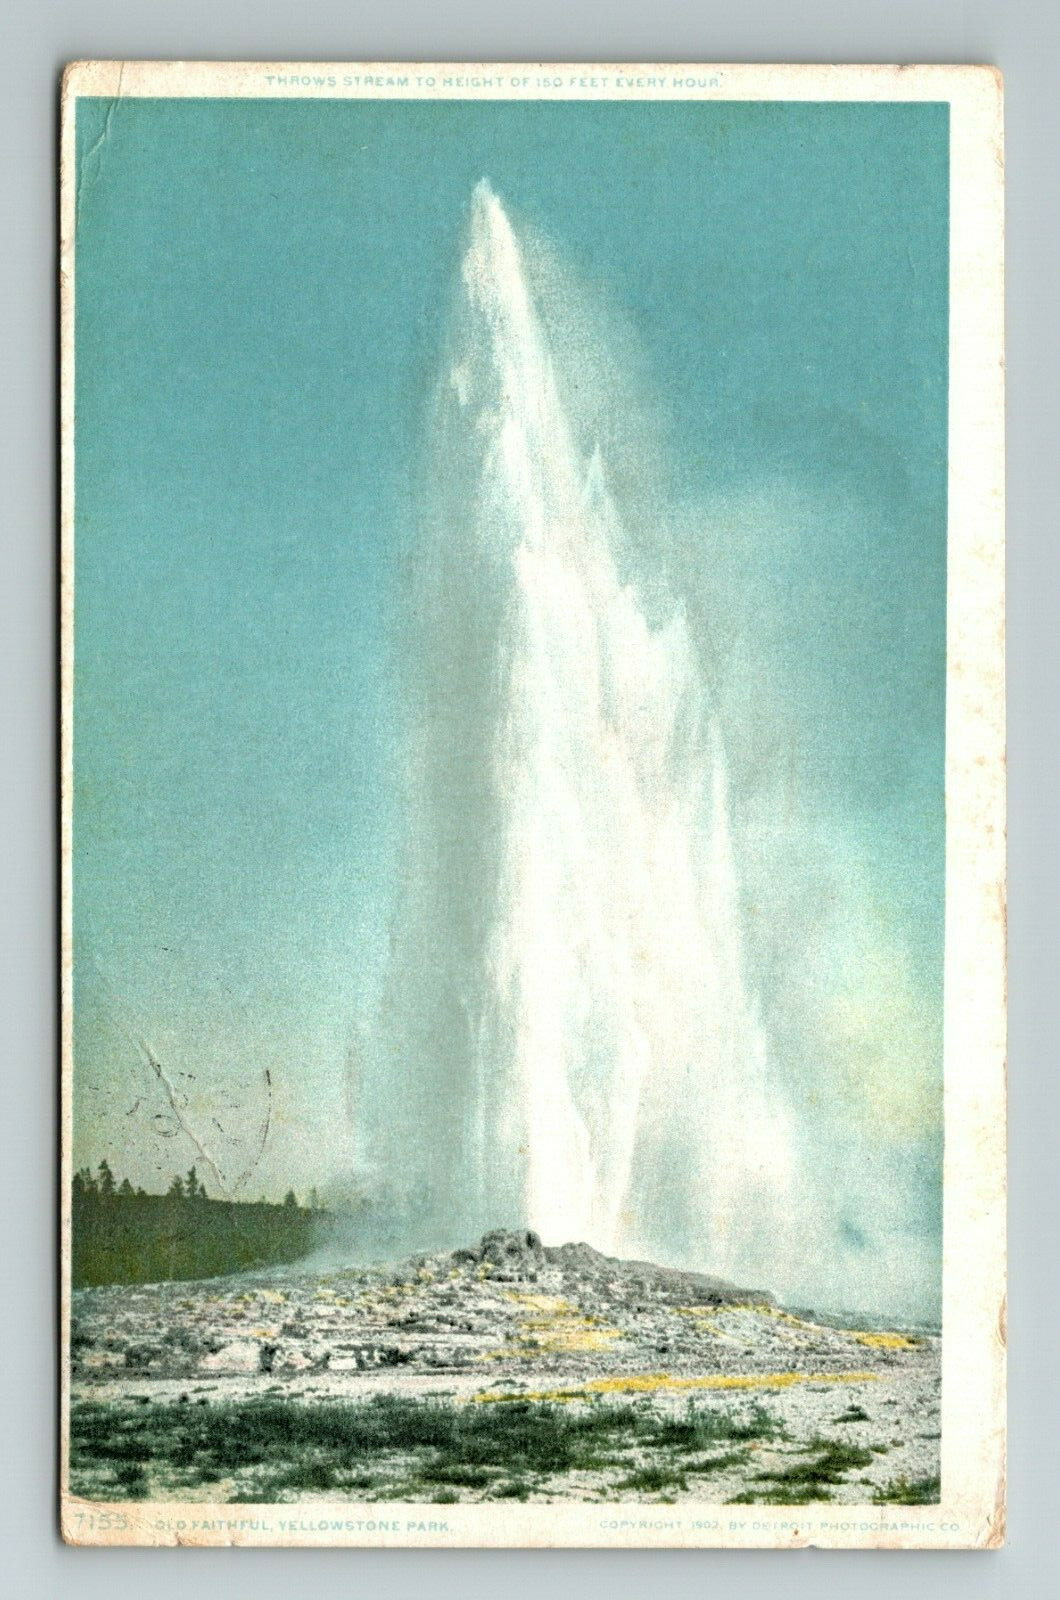 WY-Wyoming, Old Faithful, Yellowstone Park, Vintage Postcard